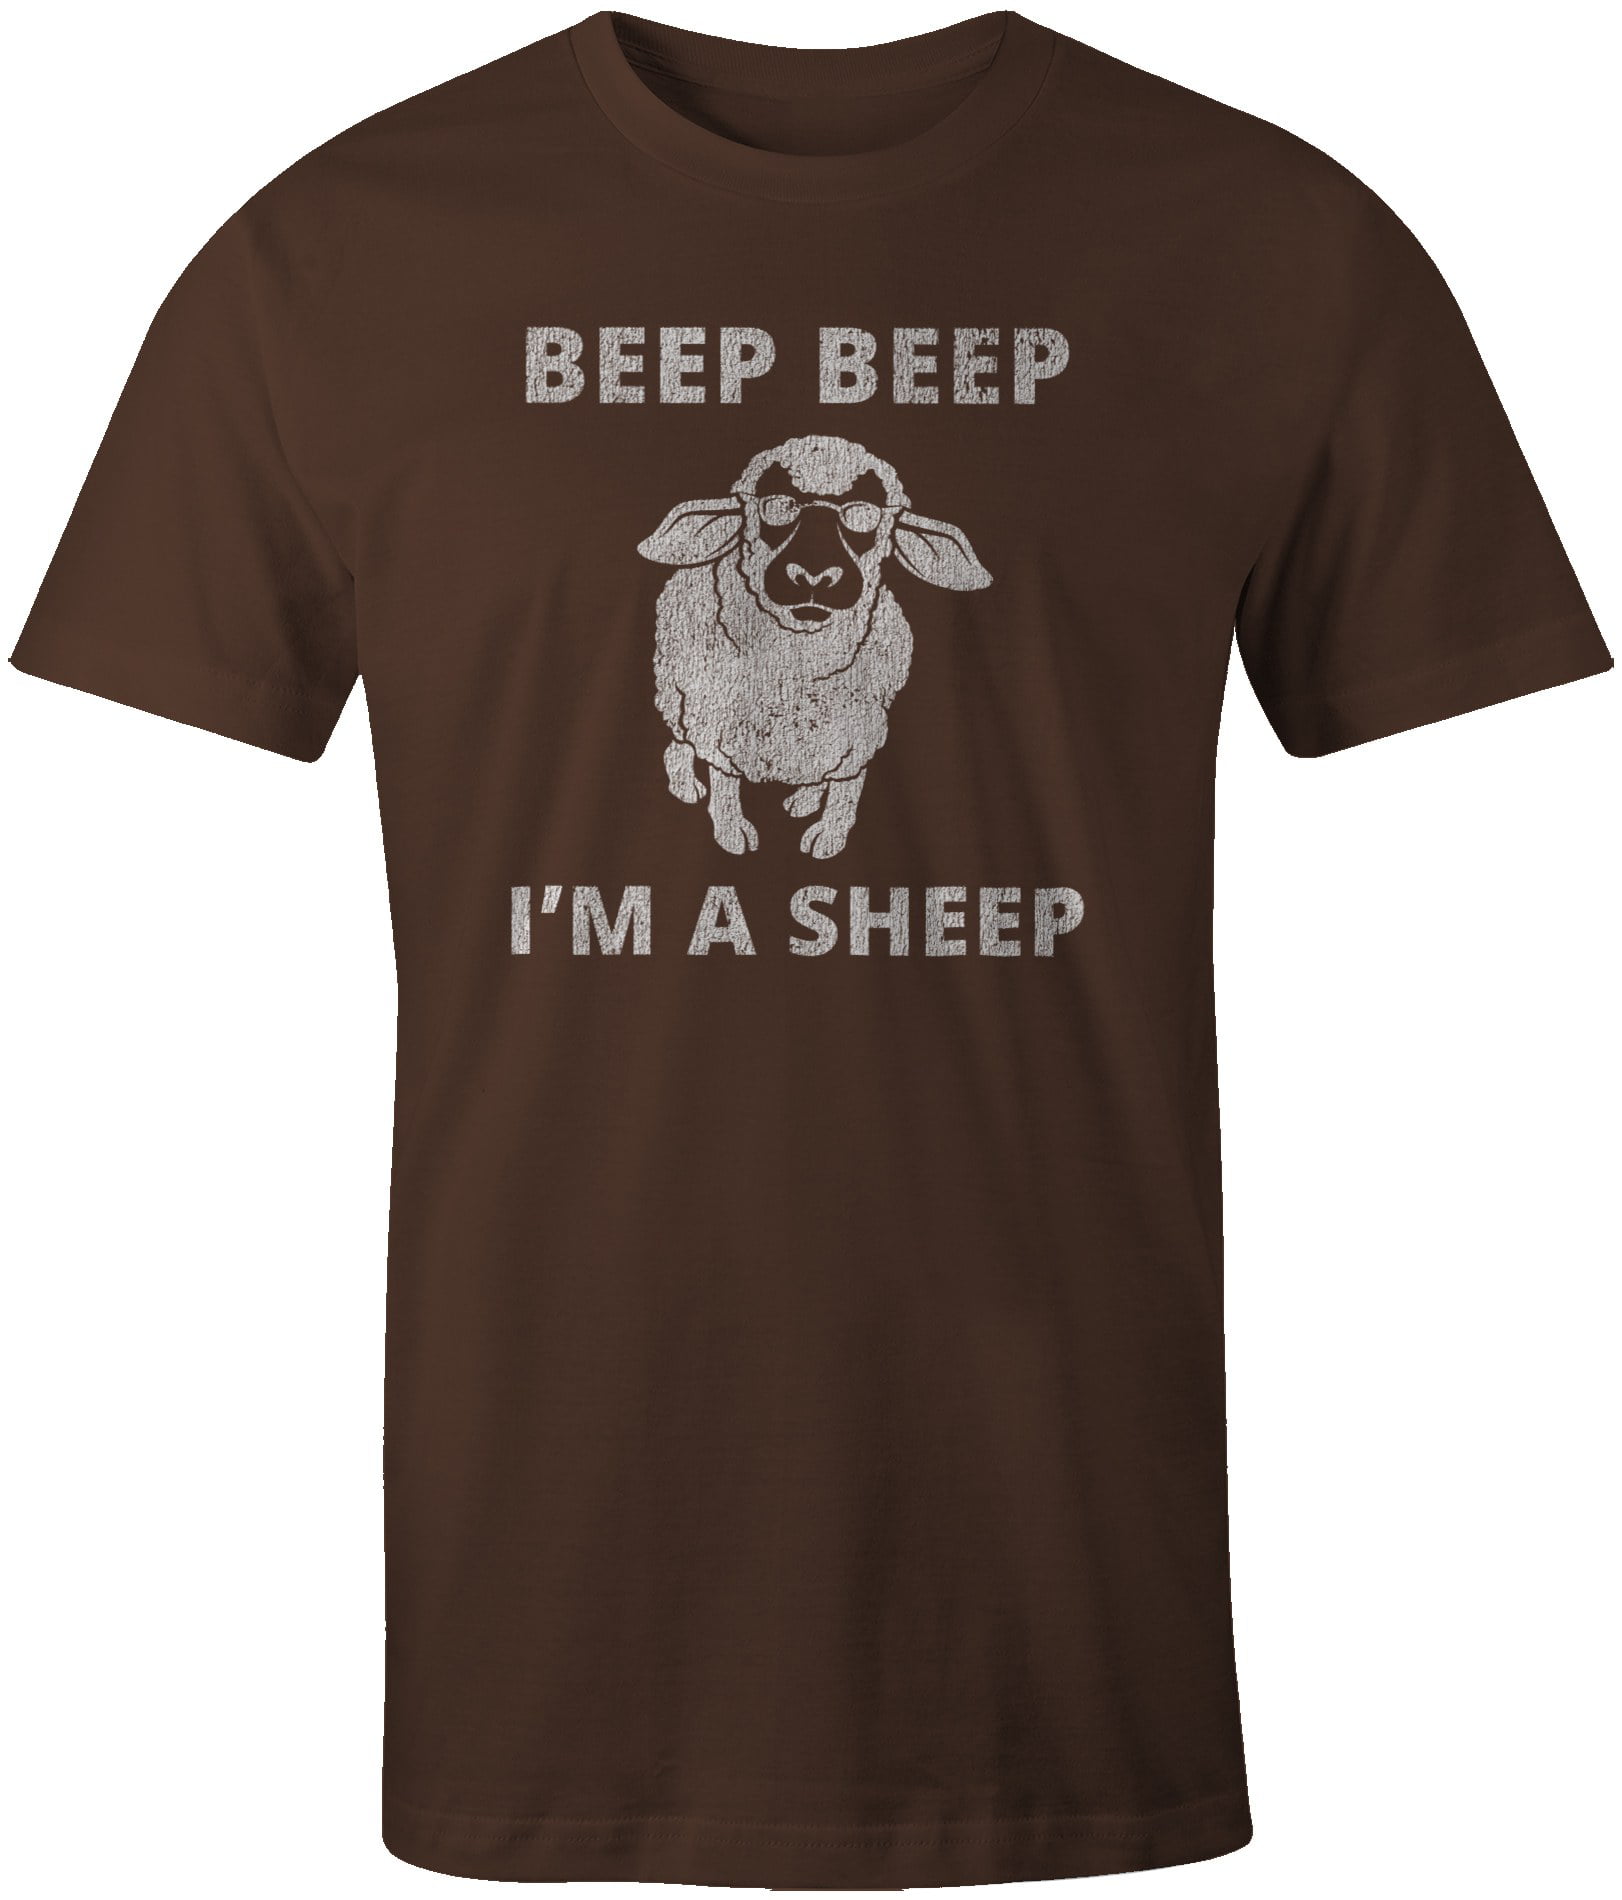 Forstad skulder skibsbygning Women's Beep Beep I'm A Sheep T-Shirt - Walmart.com